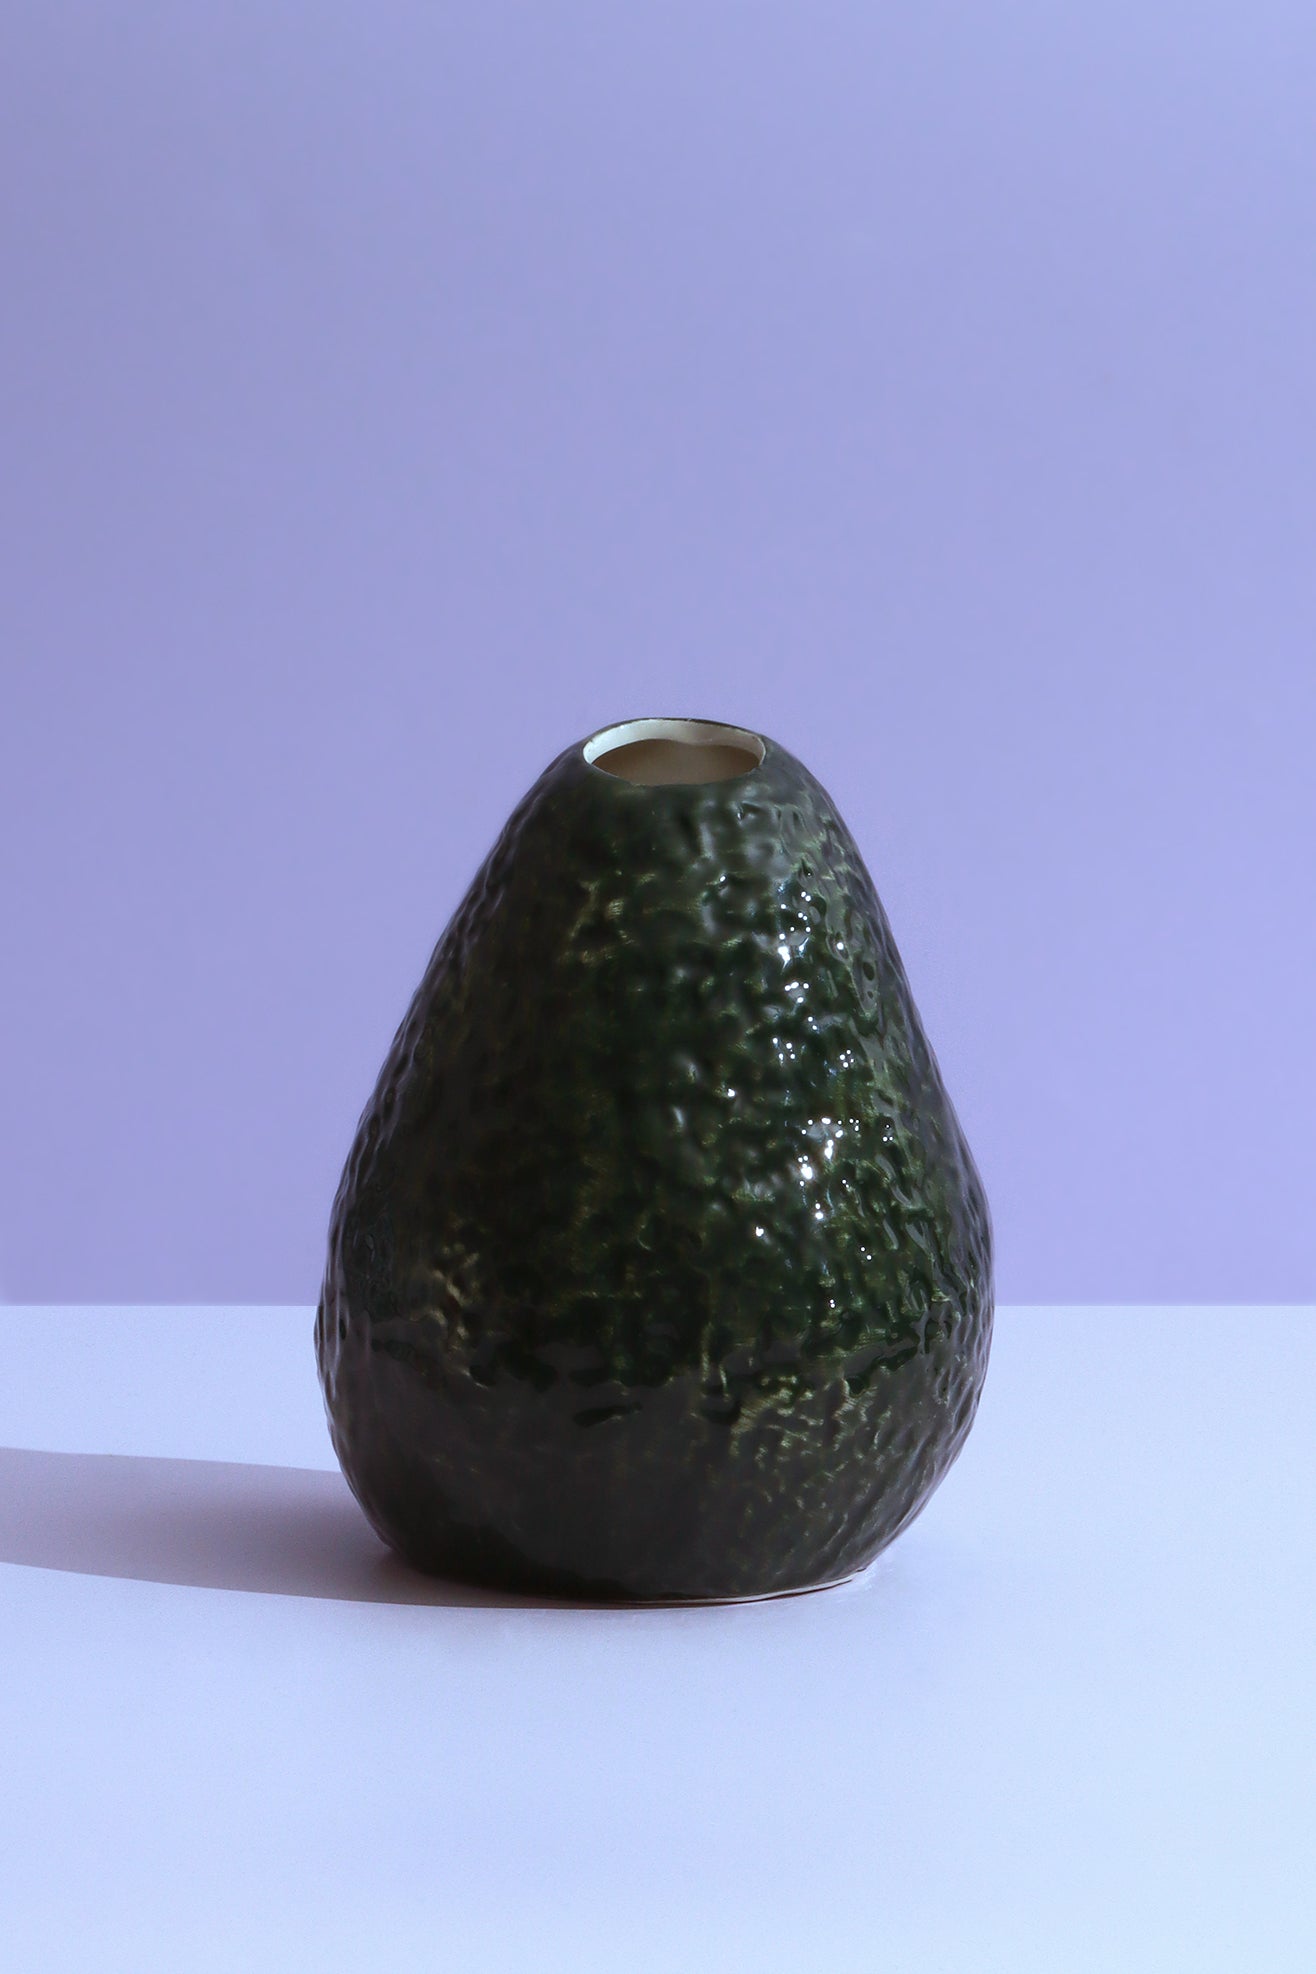 Ceramic Avocado-Shaped Vase